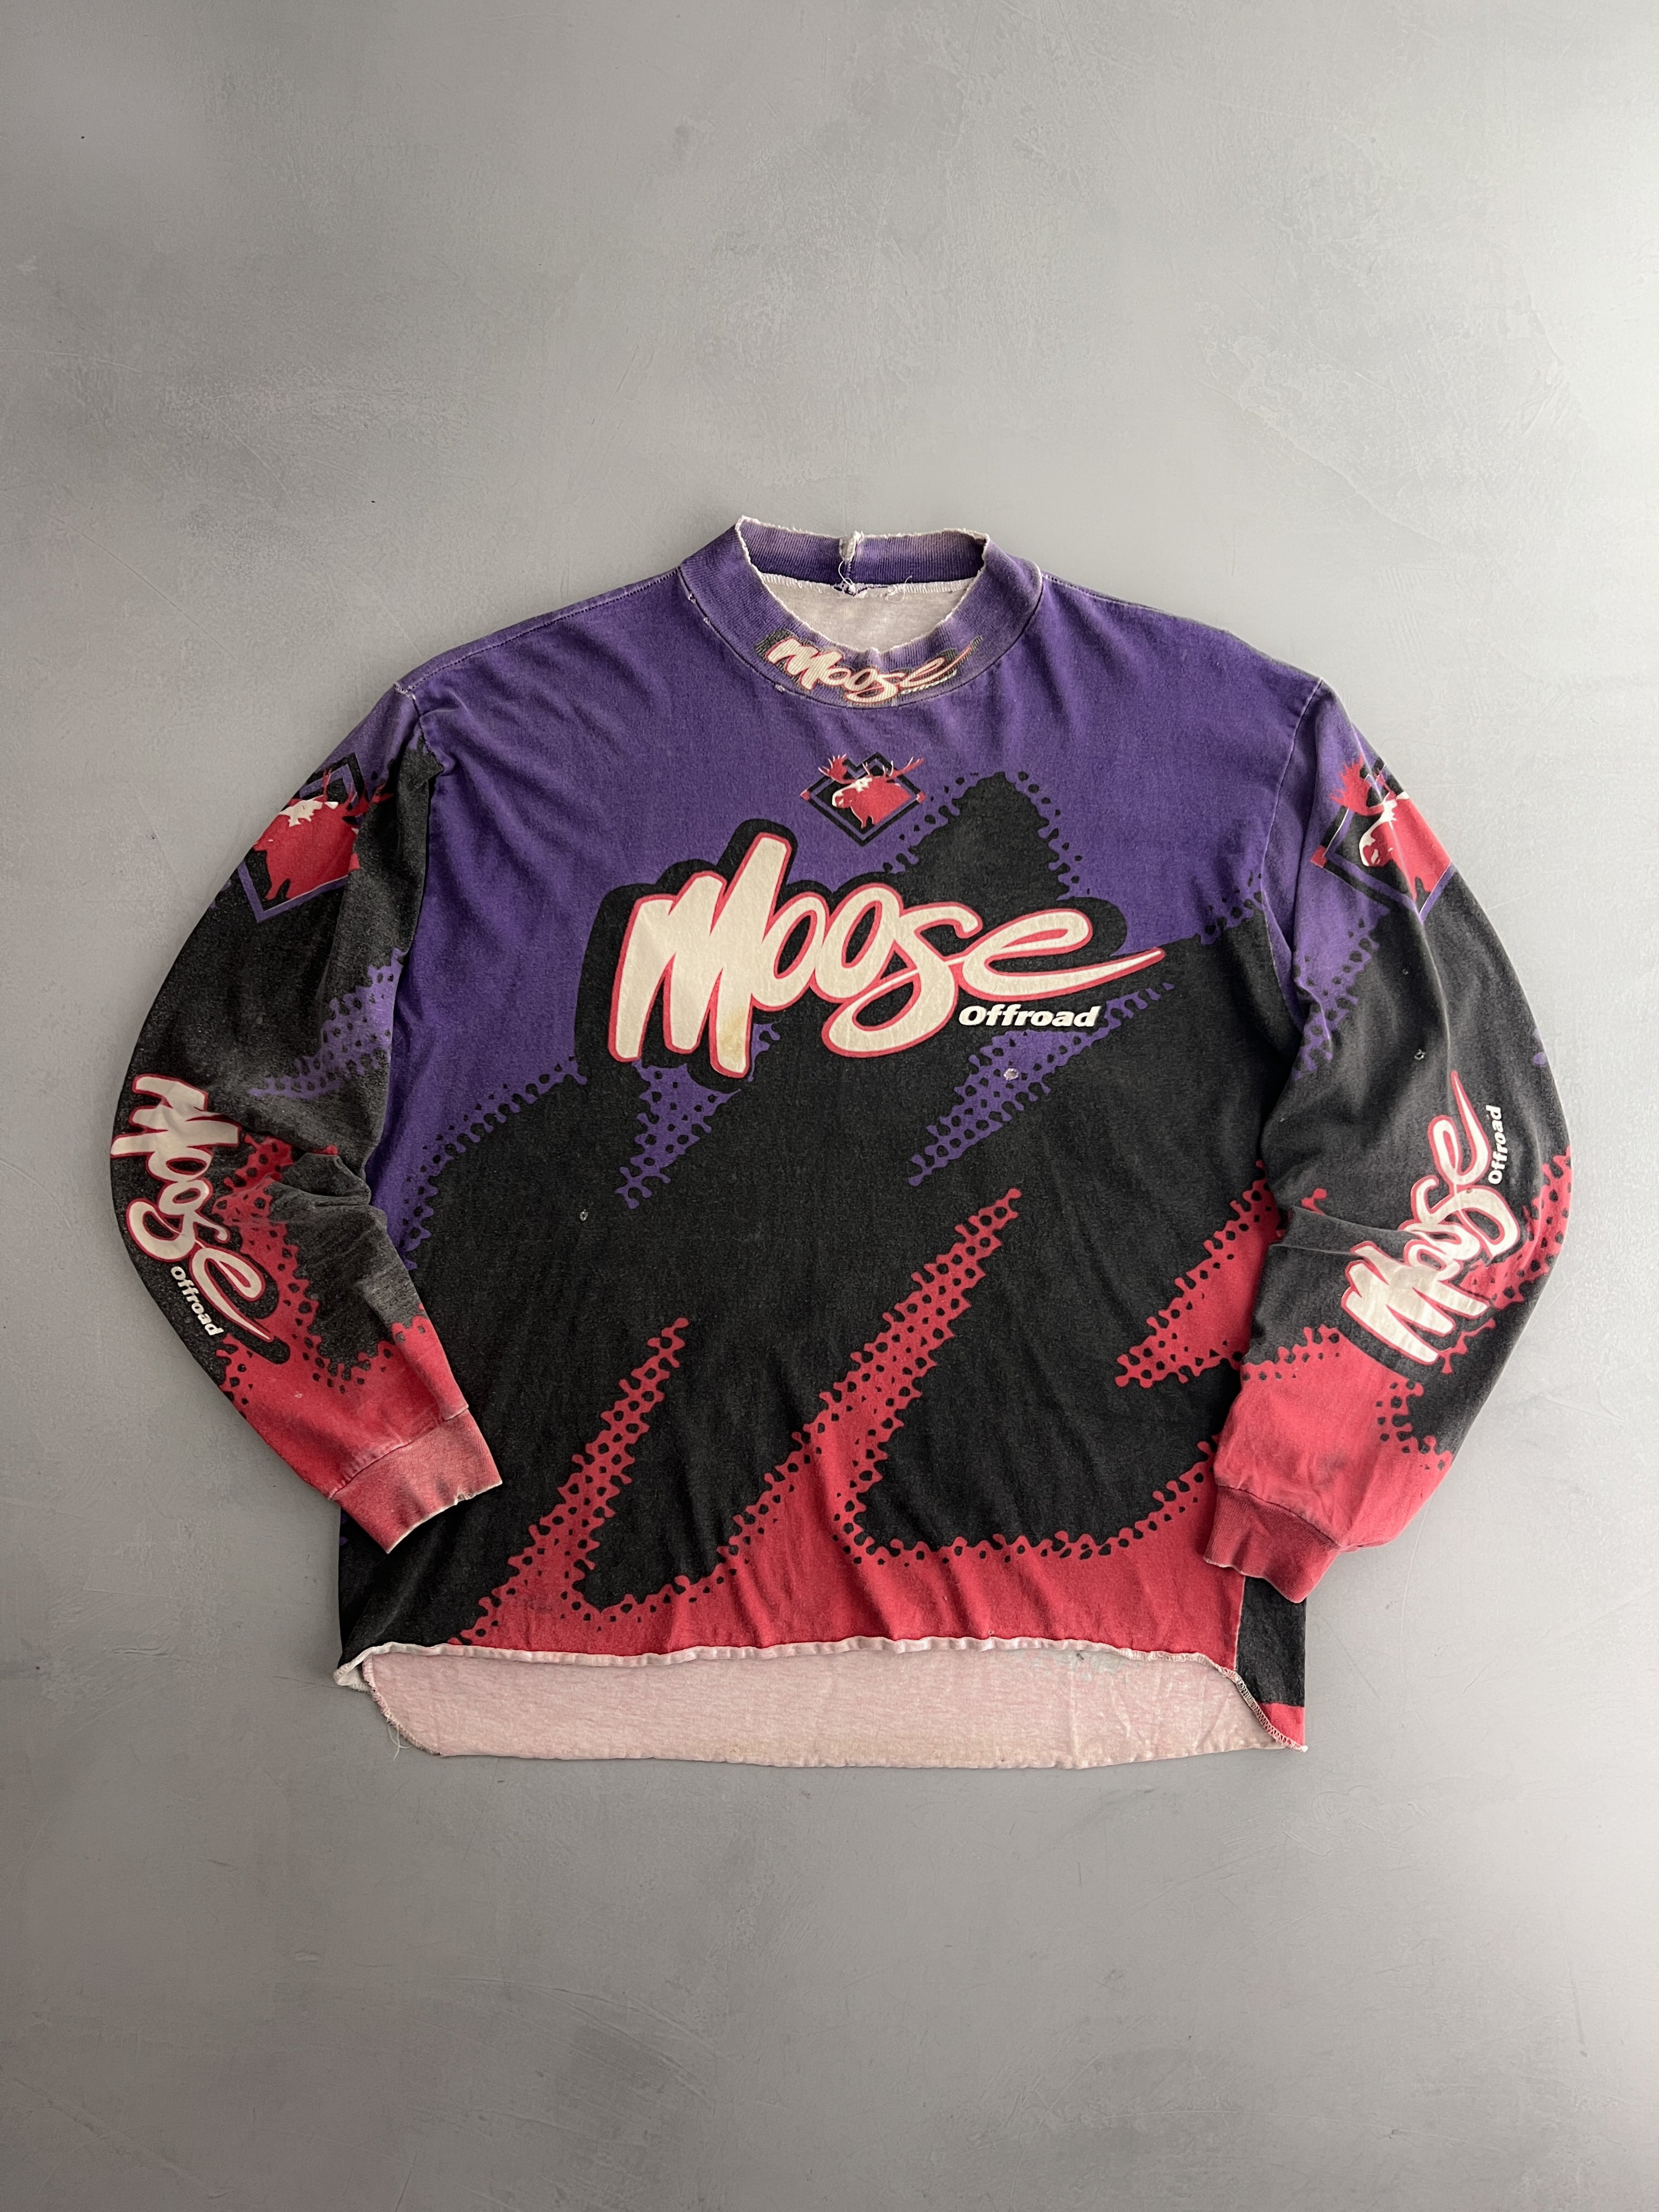 Thrashed Motocross Jersey [XL]